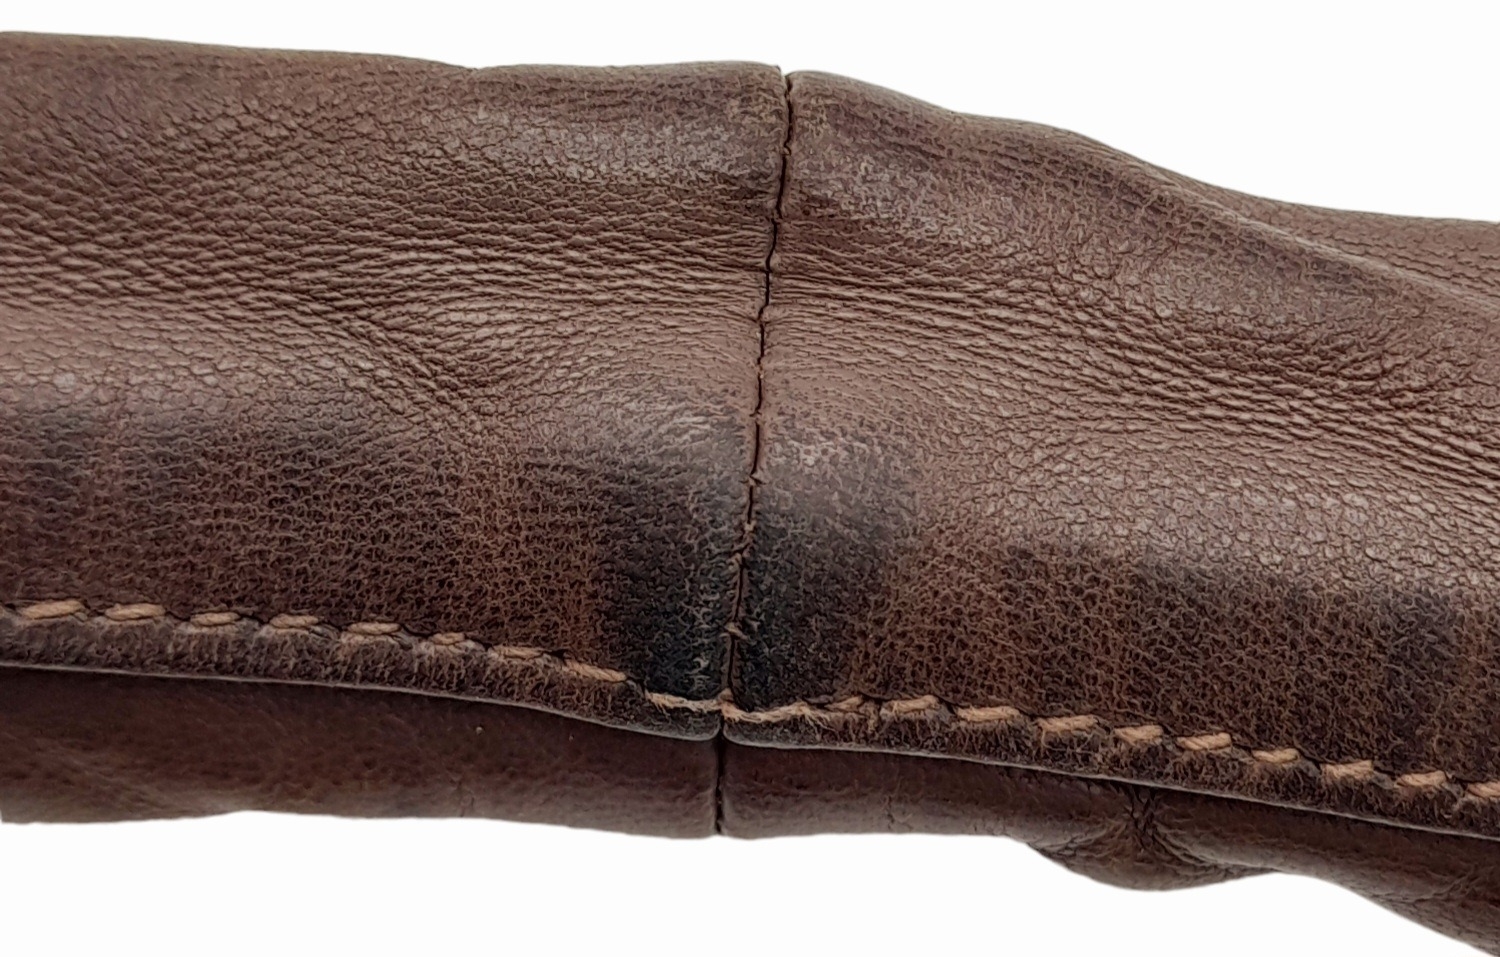 A Bottega Veneta Brown Bag. Intrecciato leather exterior with gold-toned hardware, single handle/ - Bild 4 aus 8